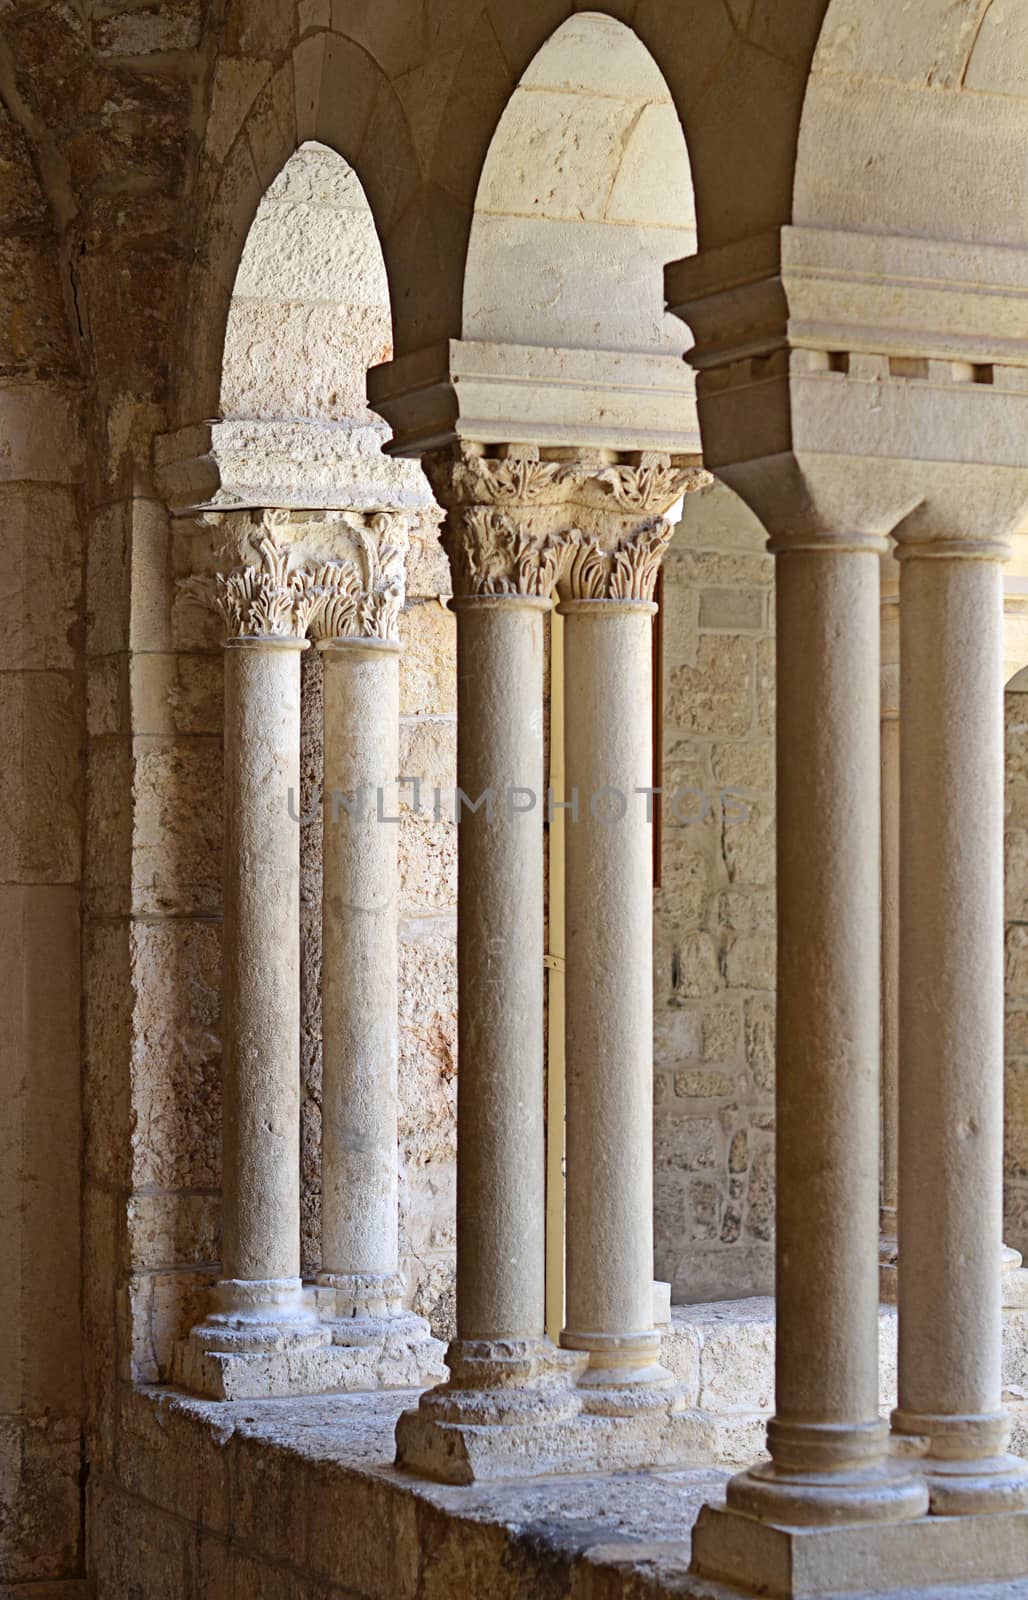 Columns in the temple in Jerusalem by SvetaVo